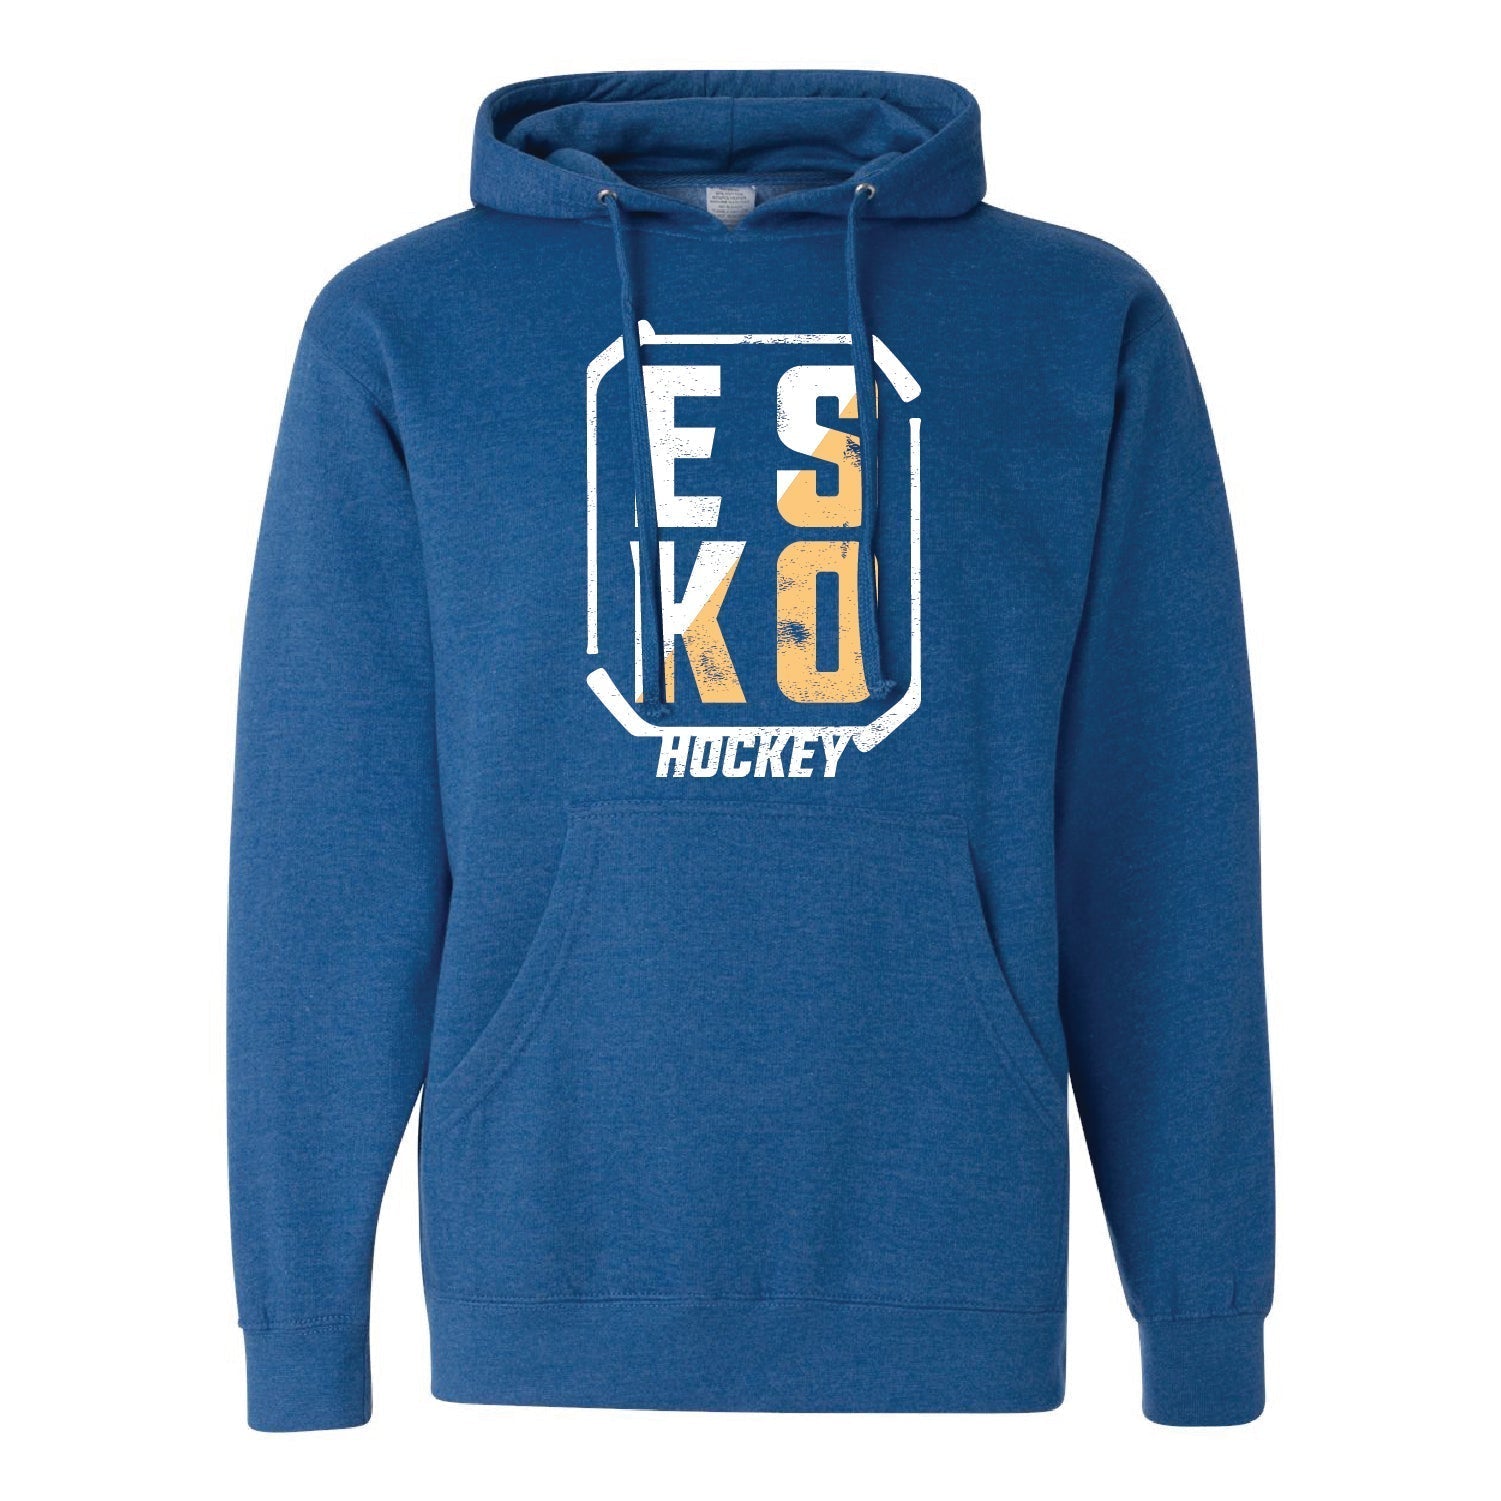 Esko Hockey Unisex Midweight Hooded Sweatshirt - DSP On Demand